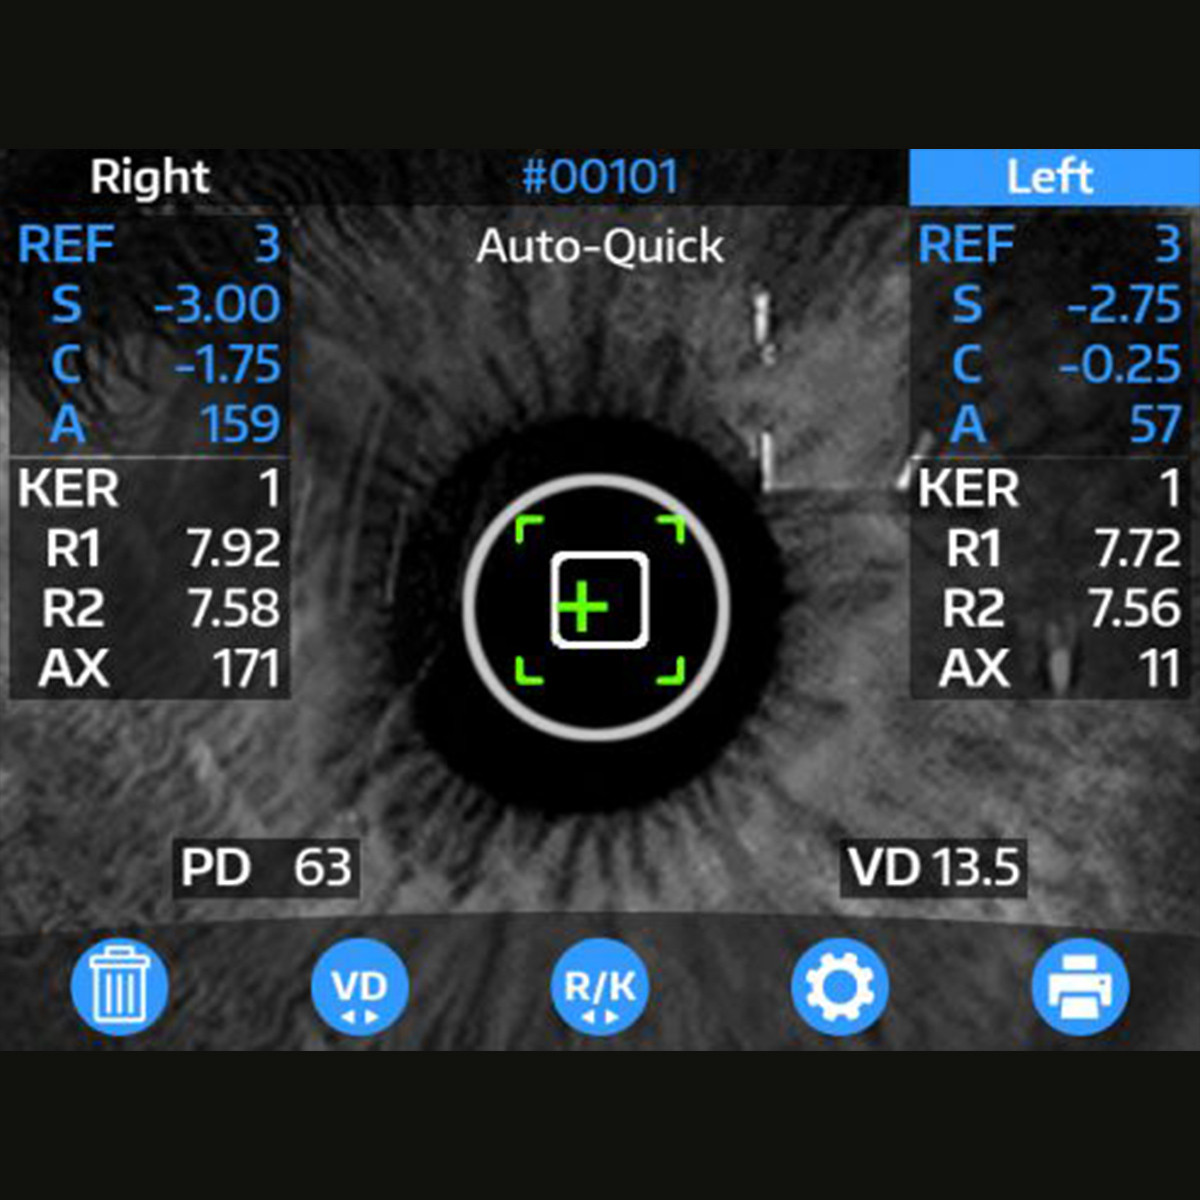 Reichert OptoChek Plus Autorefractor/Keratometer (Pre-Owned) UI screen